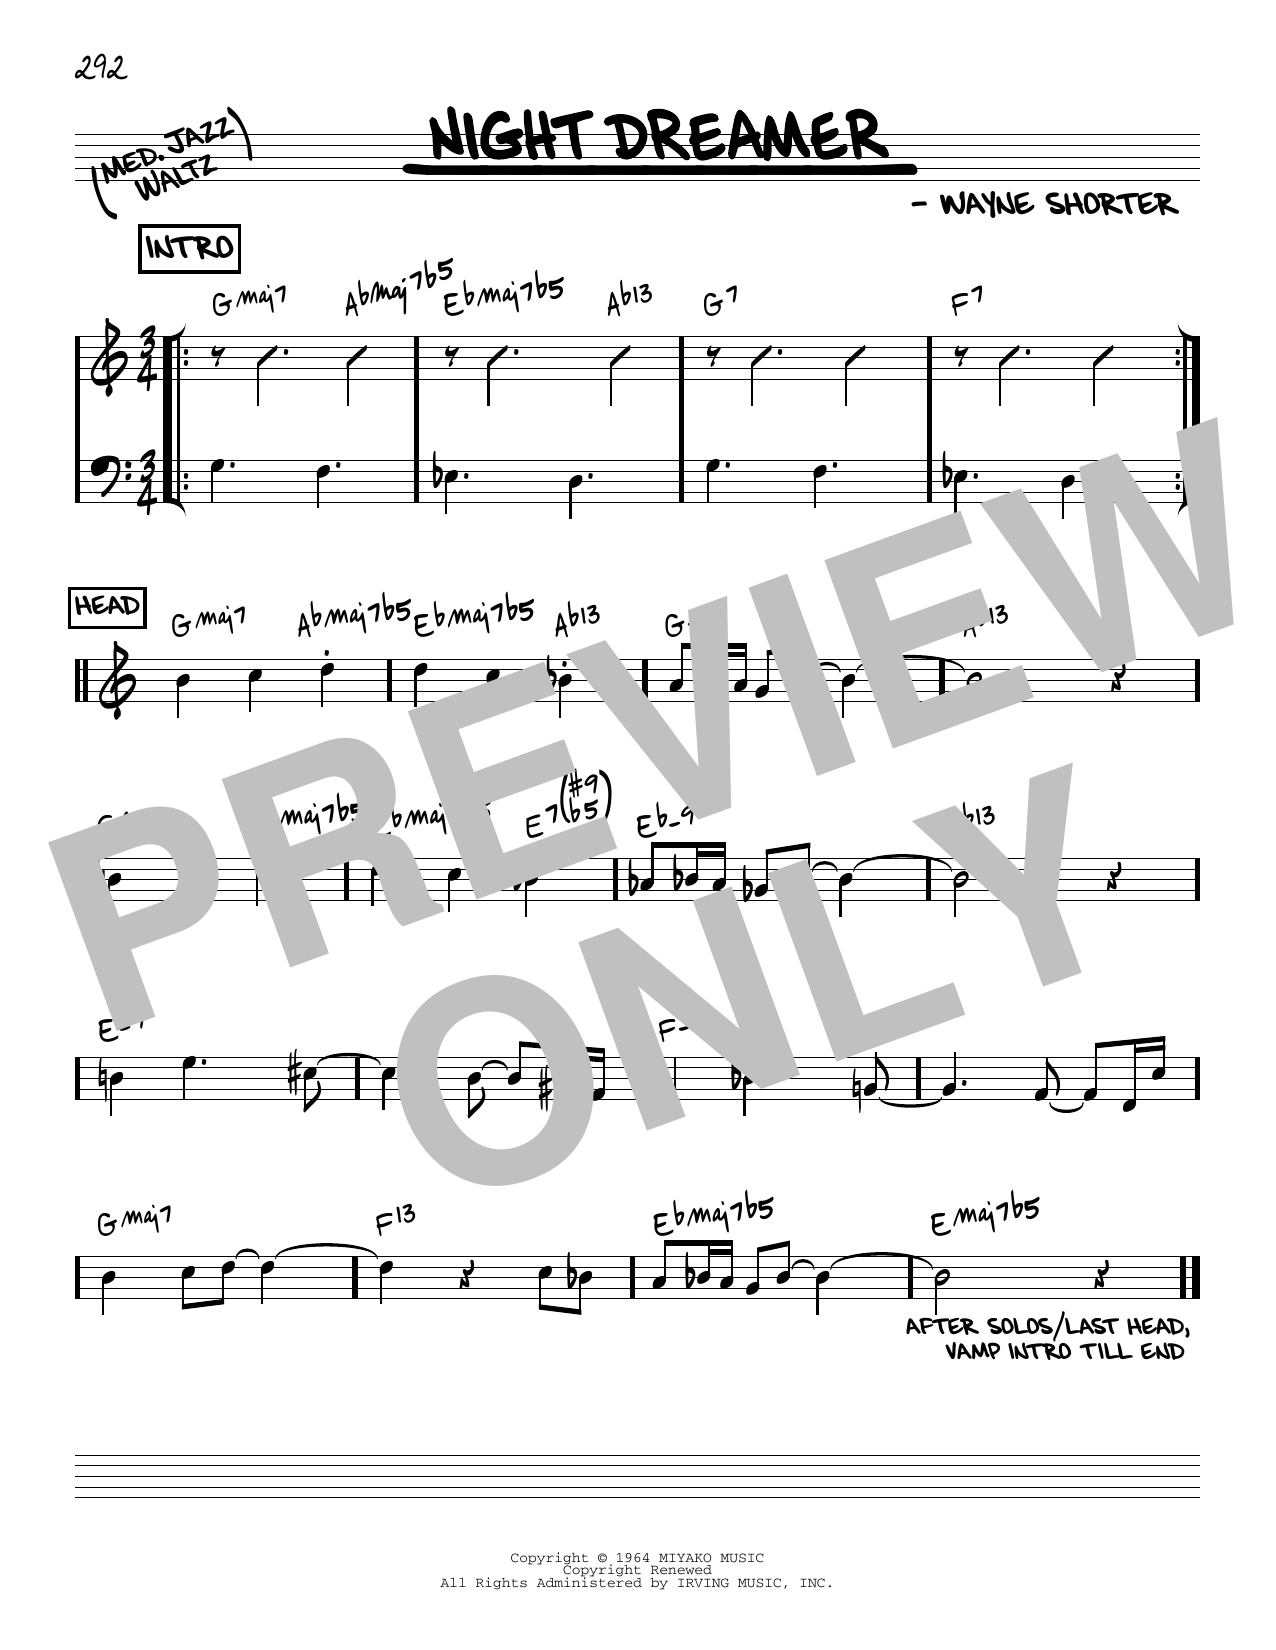 Wayne Shorter Night Dreamer [Reharmonized version] (arr. Jack Grassel) Sheet Music Notes & Chords for Real Book – Melody & Chords - Download or Print PDF